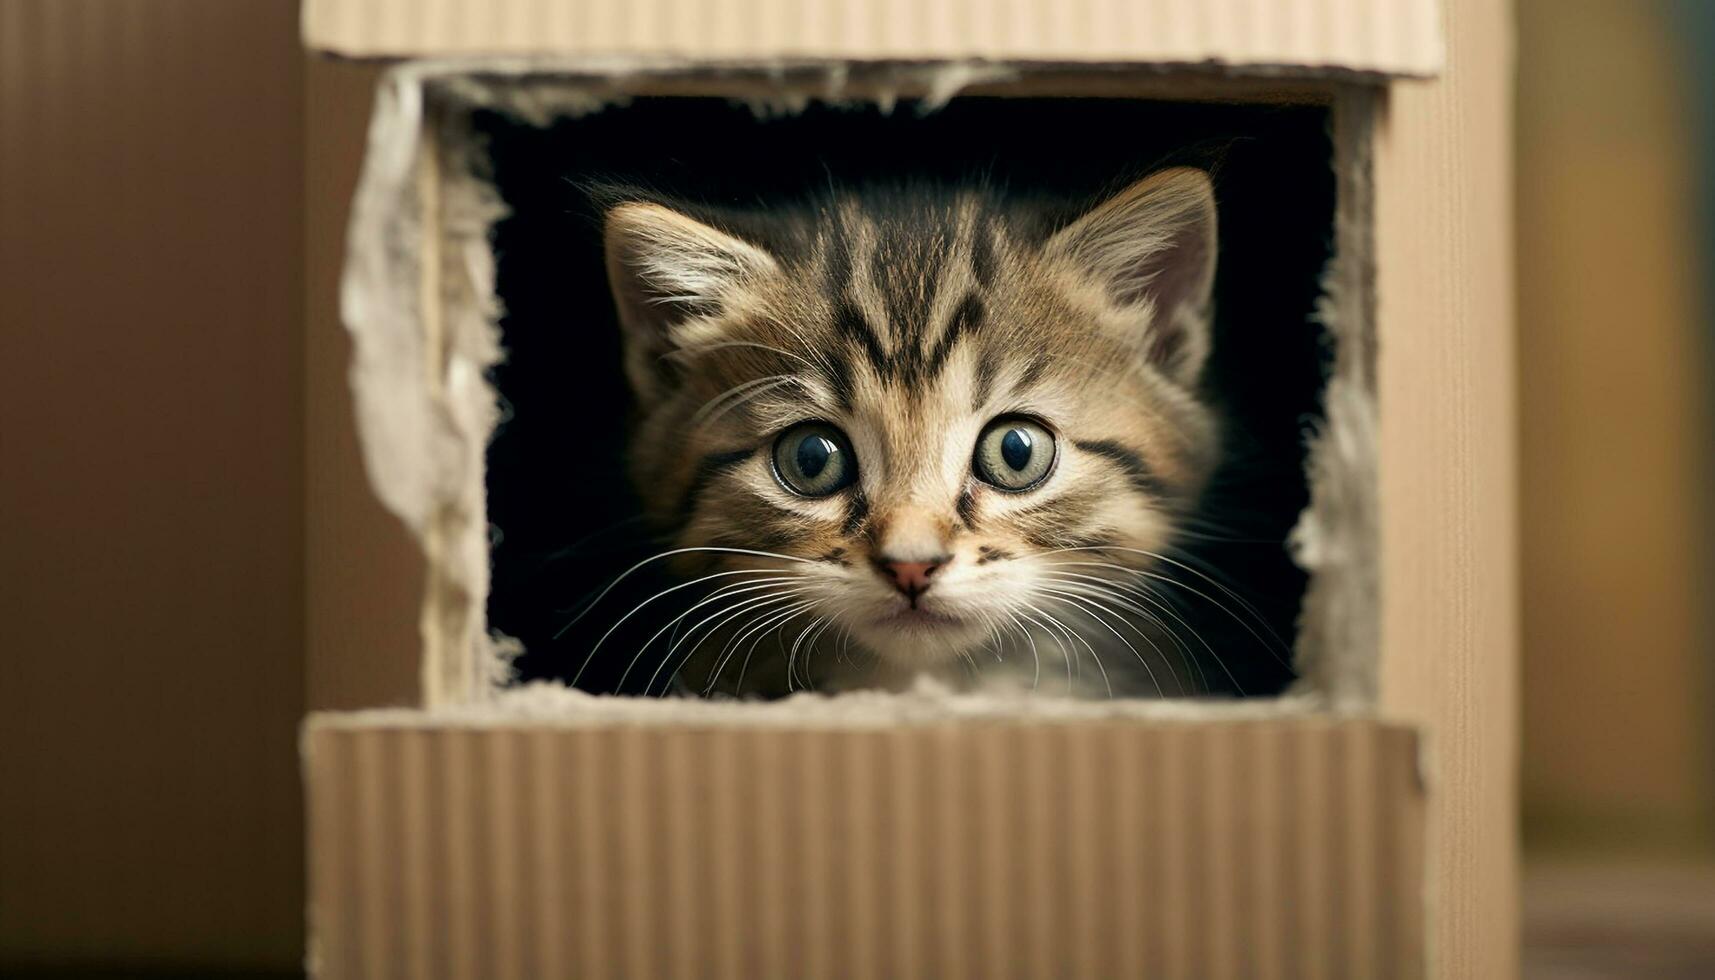 Cute kitten hiding in a cardboard box, peeking out generated by AI photo